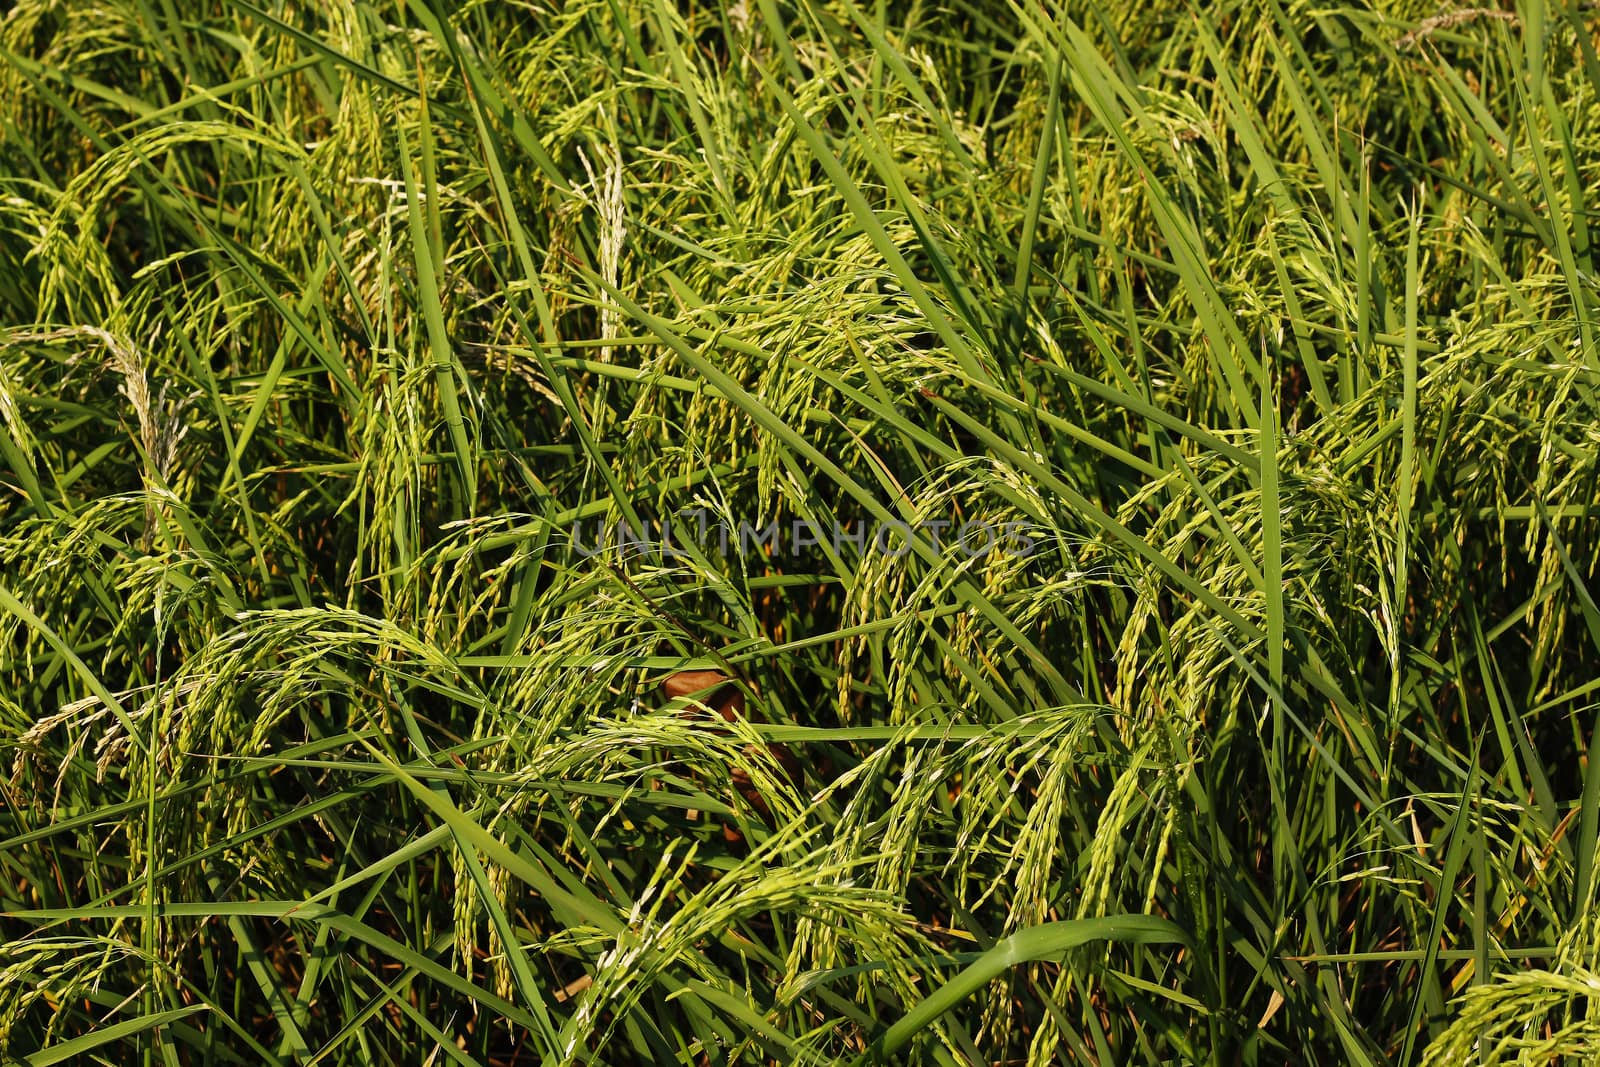 Green Rice Field by godunk13